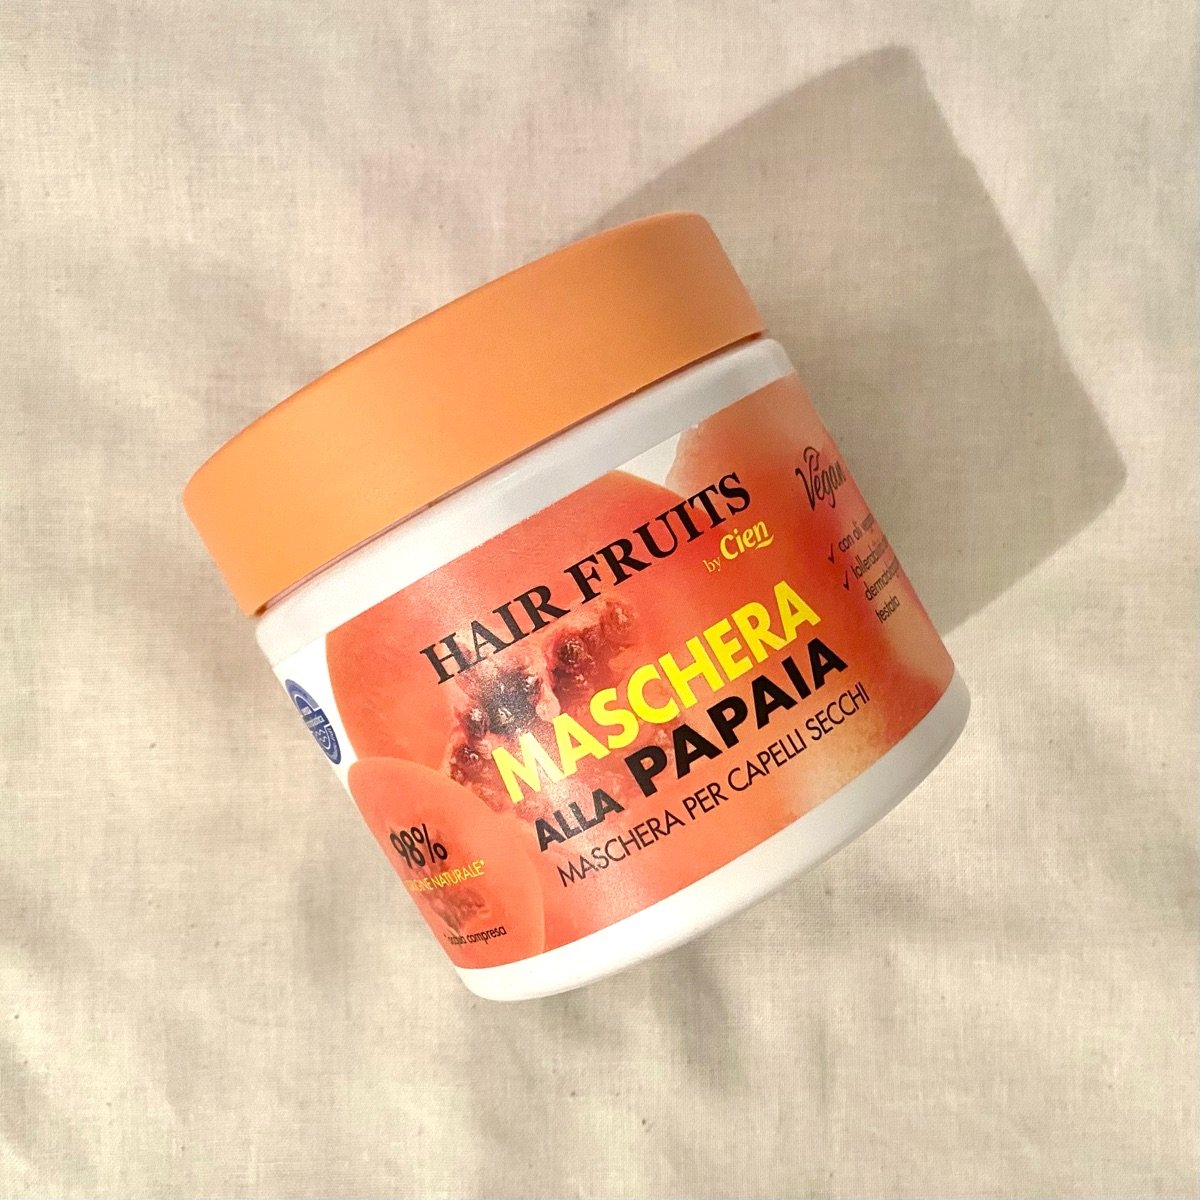 Cien Hair fruits maschera alla papaia Review | abillion